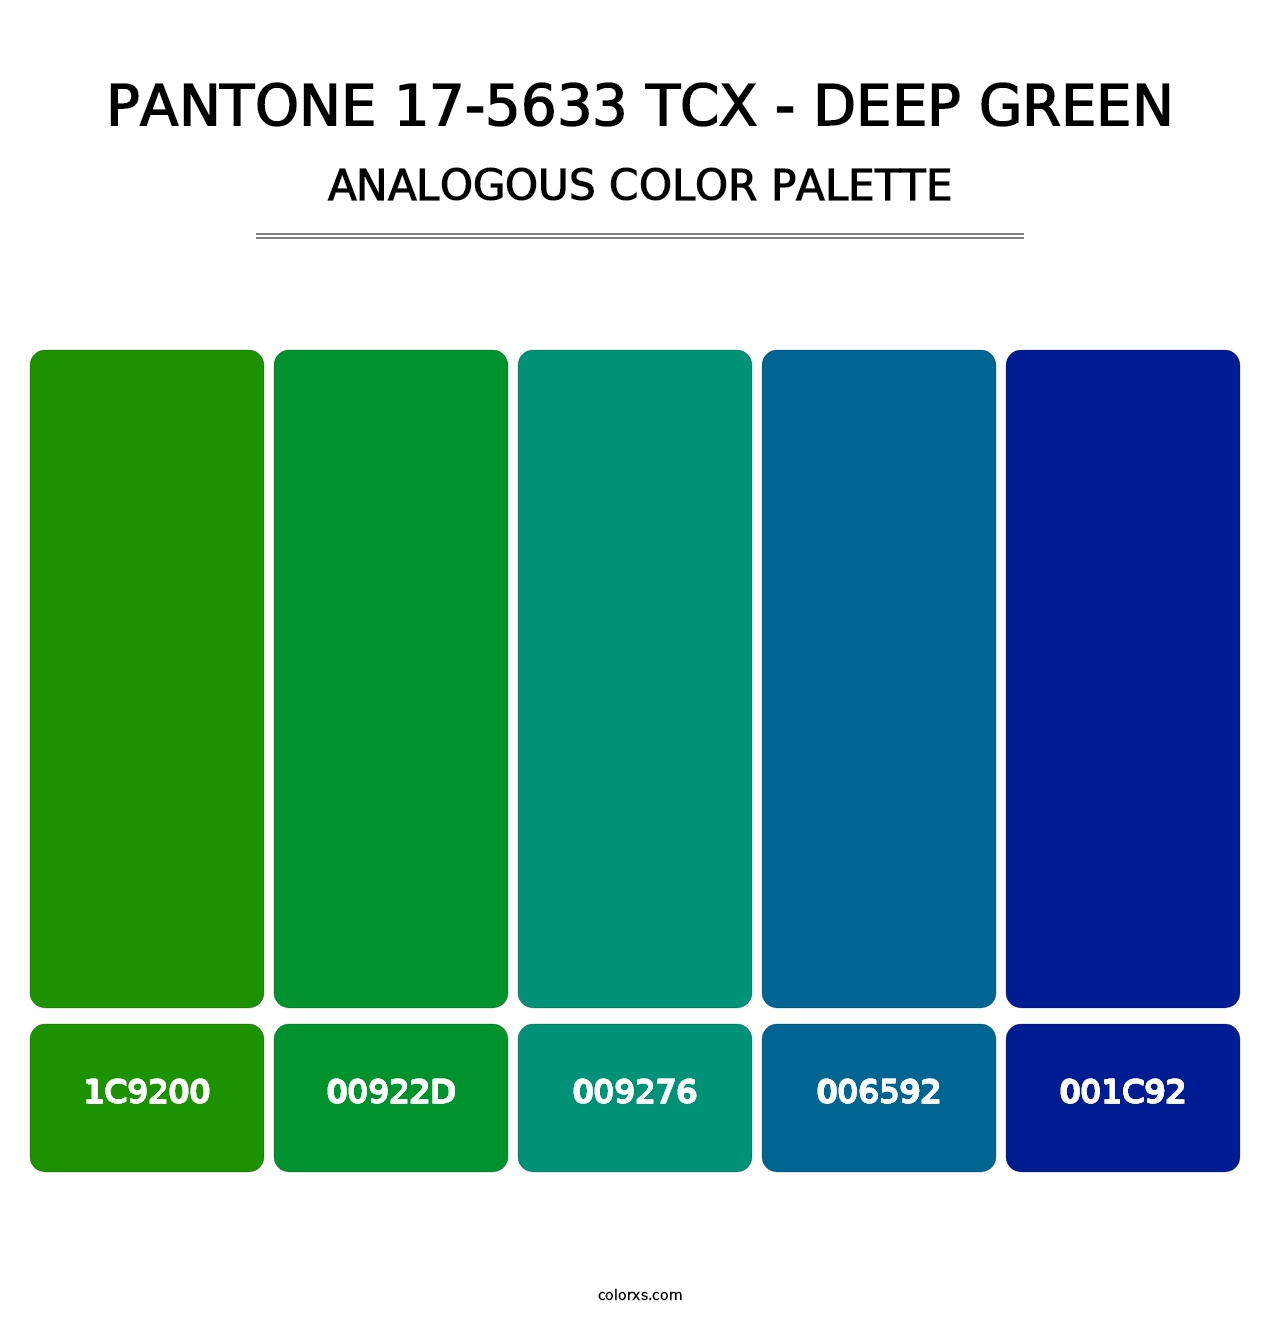 PANTONE 17-5633 TCX - Deep Green - Analogous Color Palette